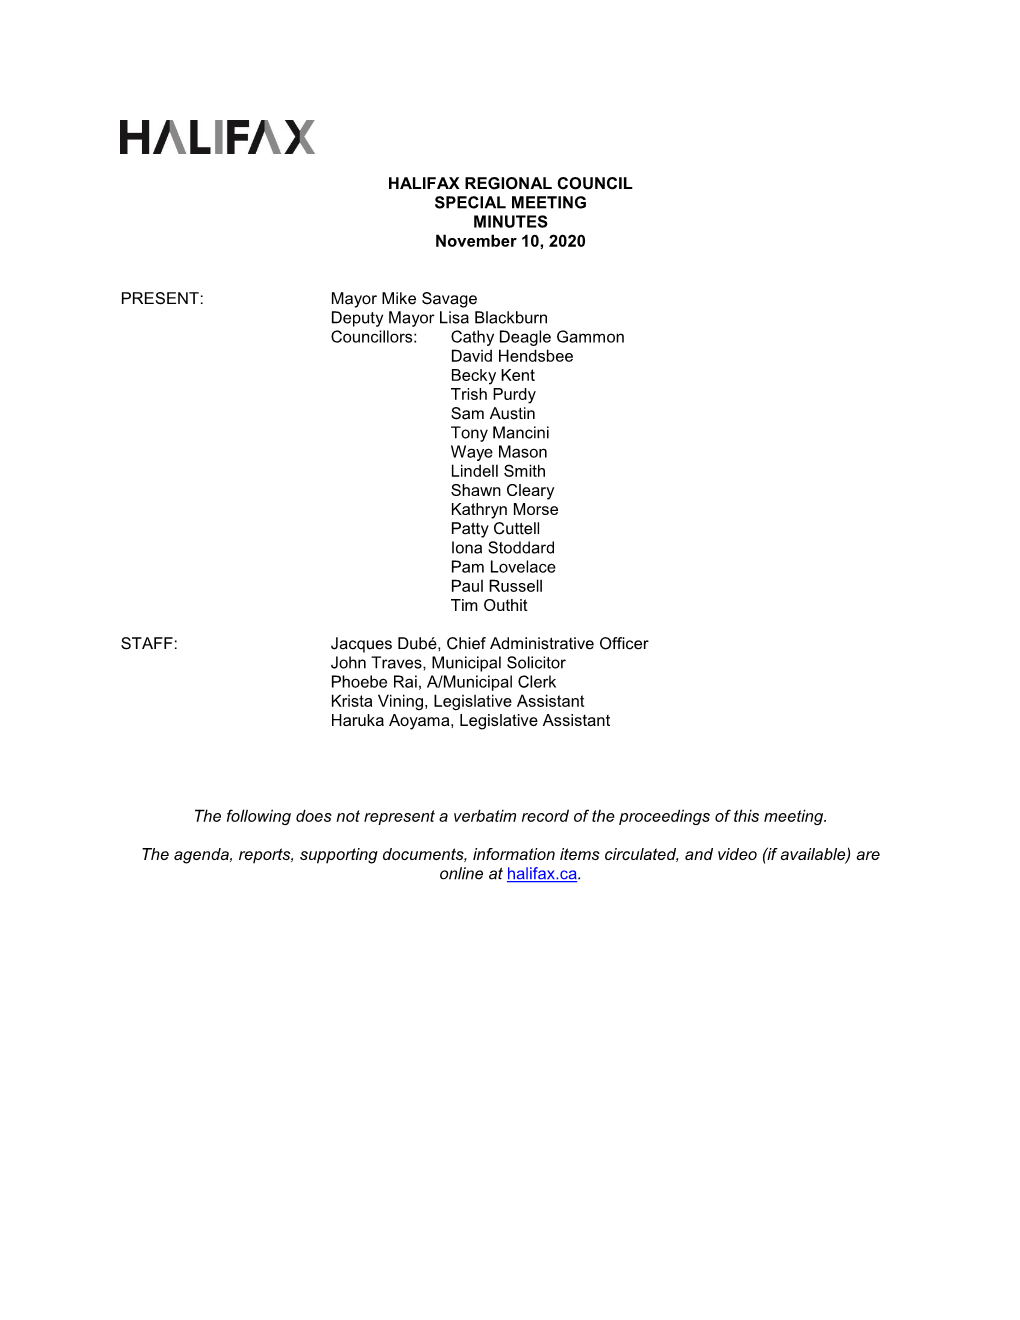 November 10, 2020 Halifax Regional Council Special Meeting Minutes